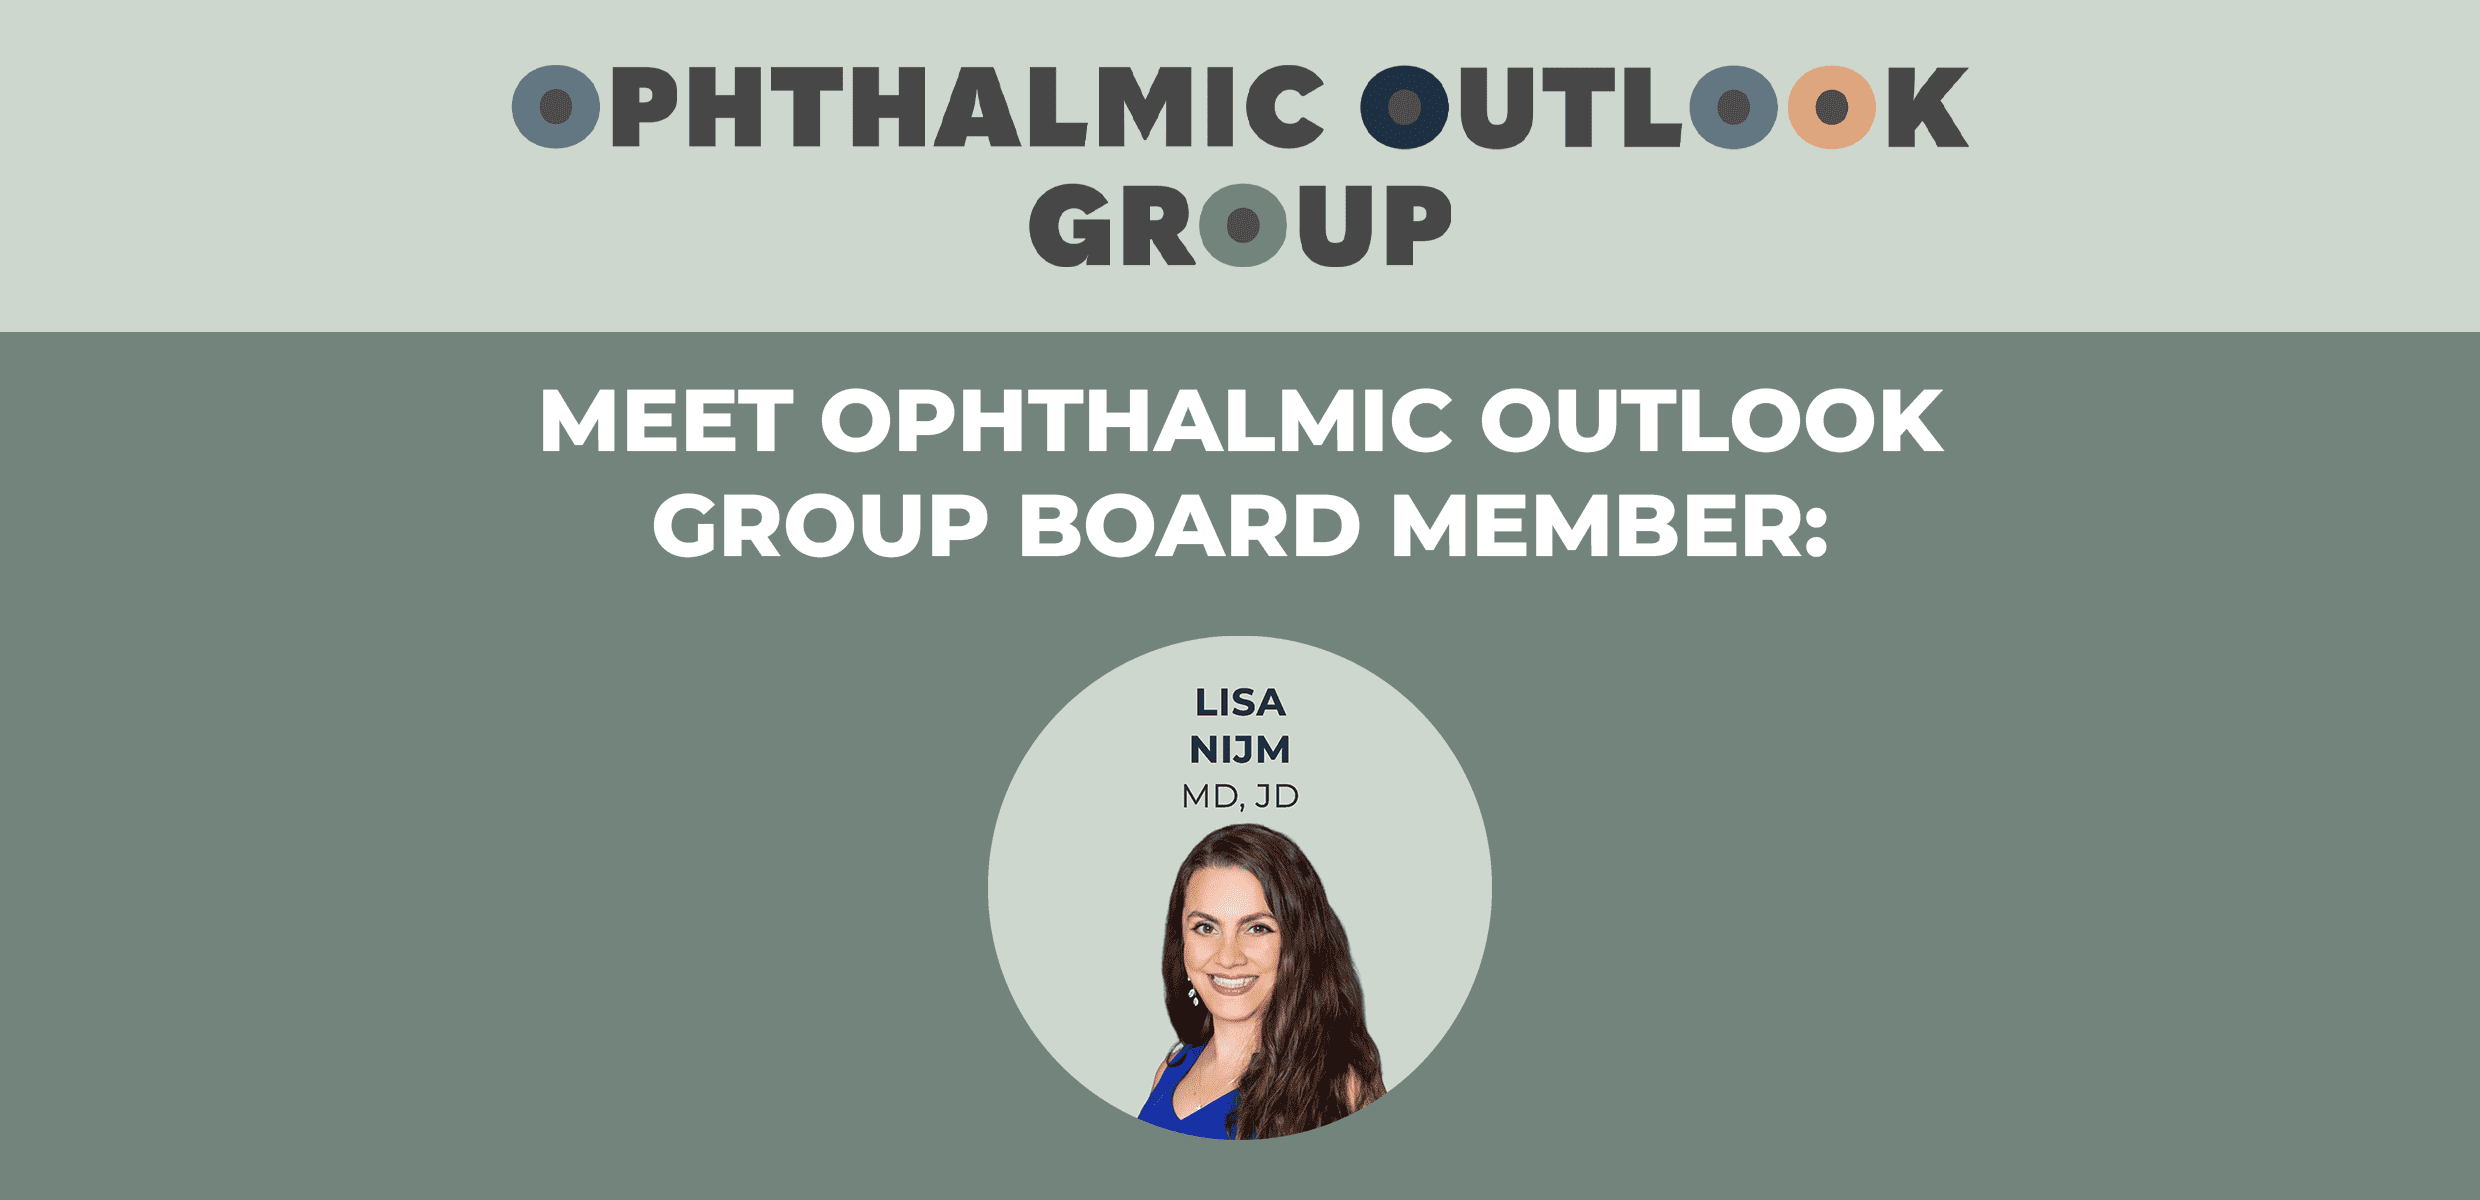 Meet Ophthalmic Outlook Group Board Member: Lisa Nijm, MD, JD